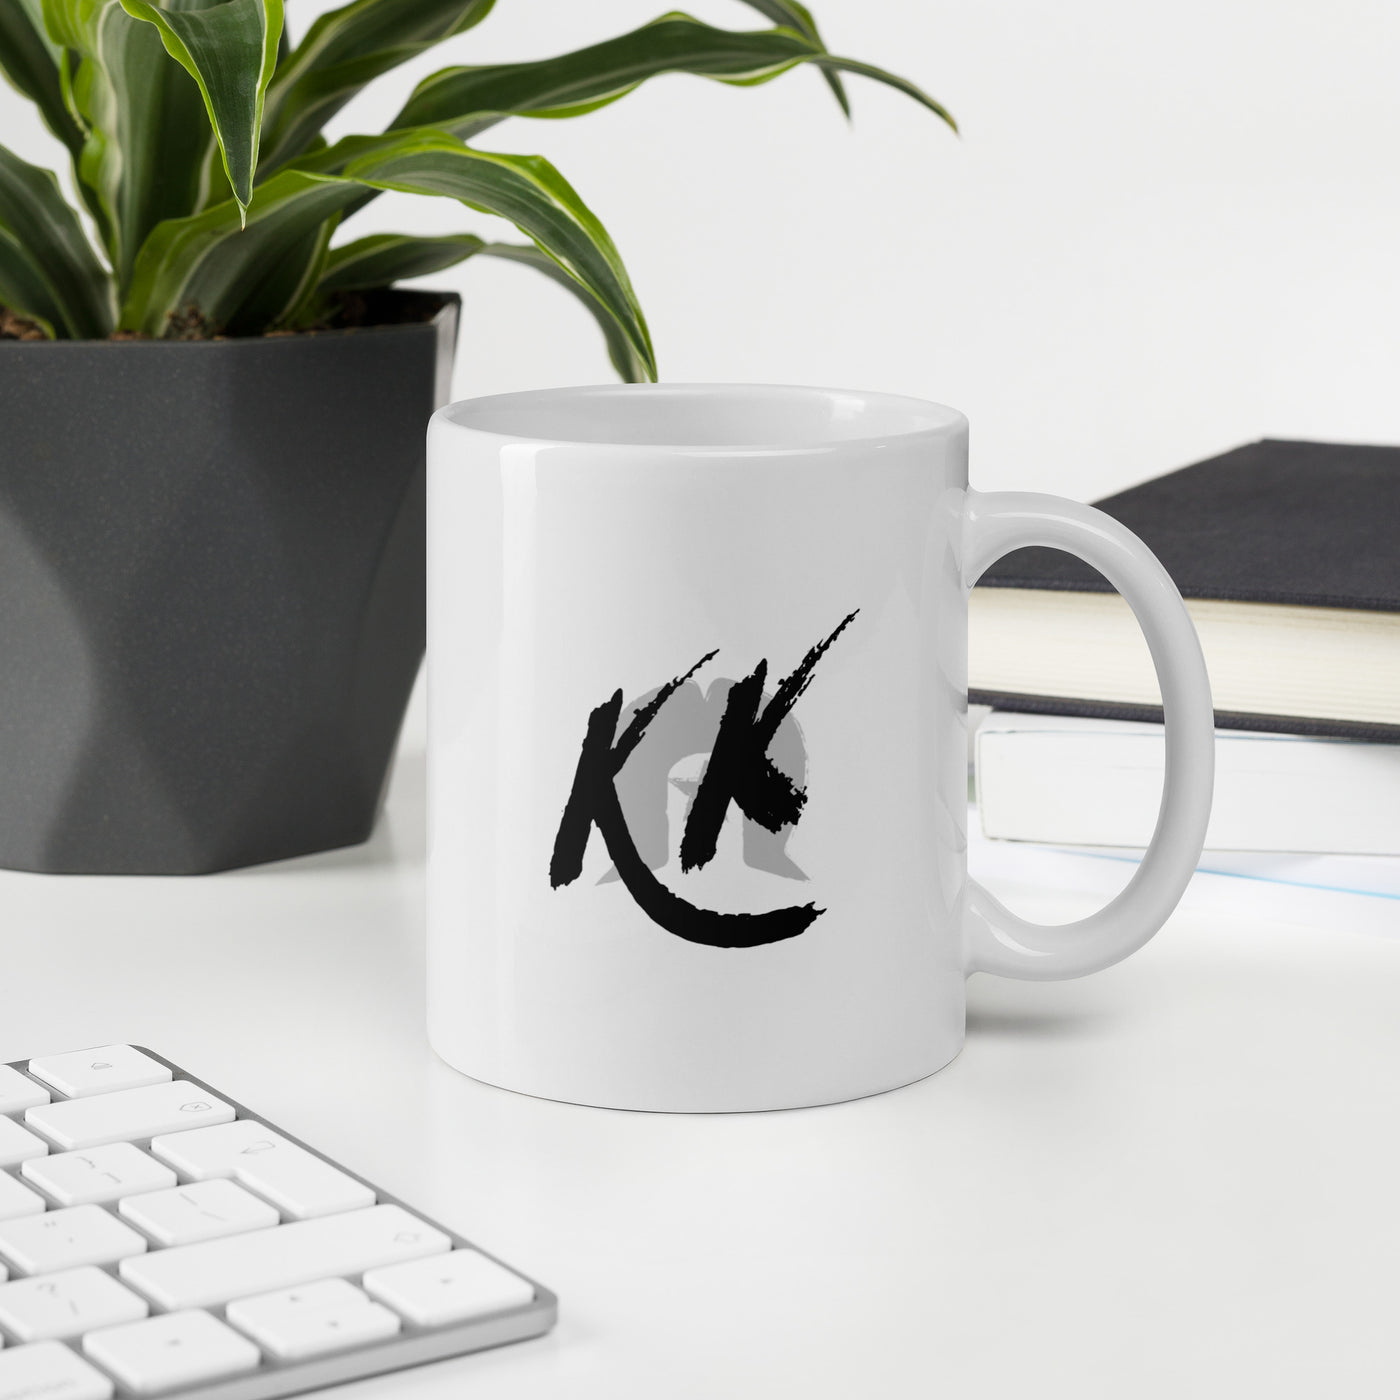 Official Kiwat Kennell - Glossy Mug